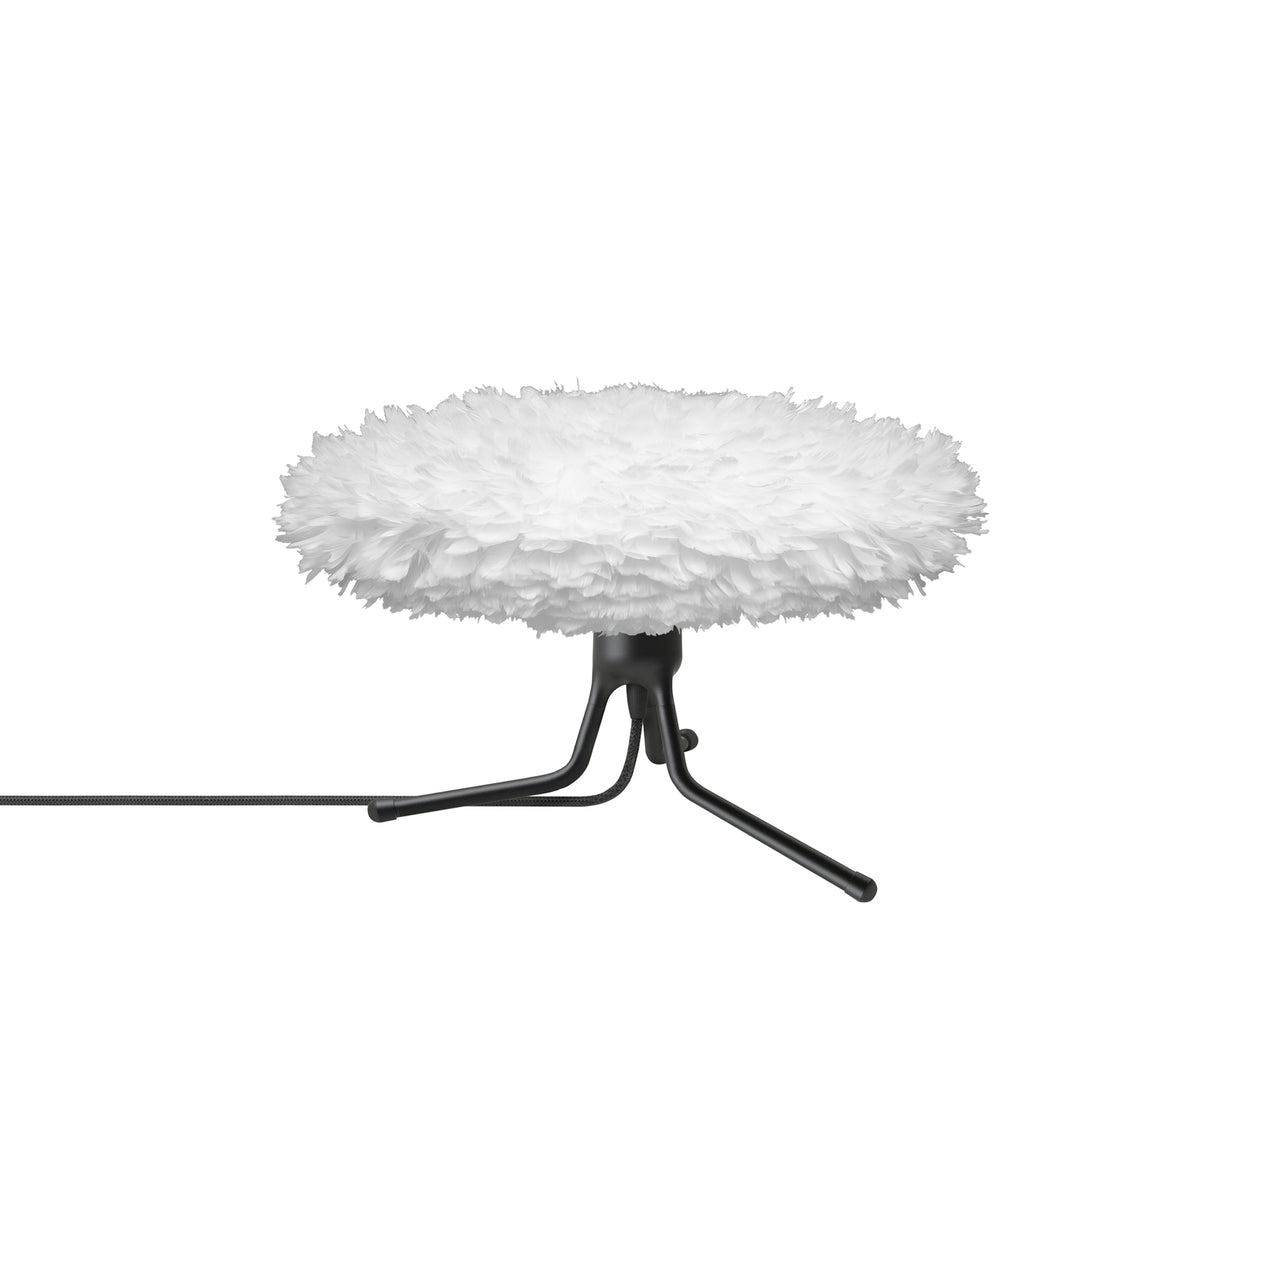 Eos Esther Adjustable Tripod Table Lamp: Medium - 24